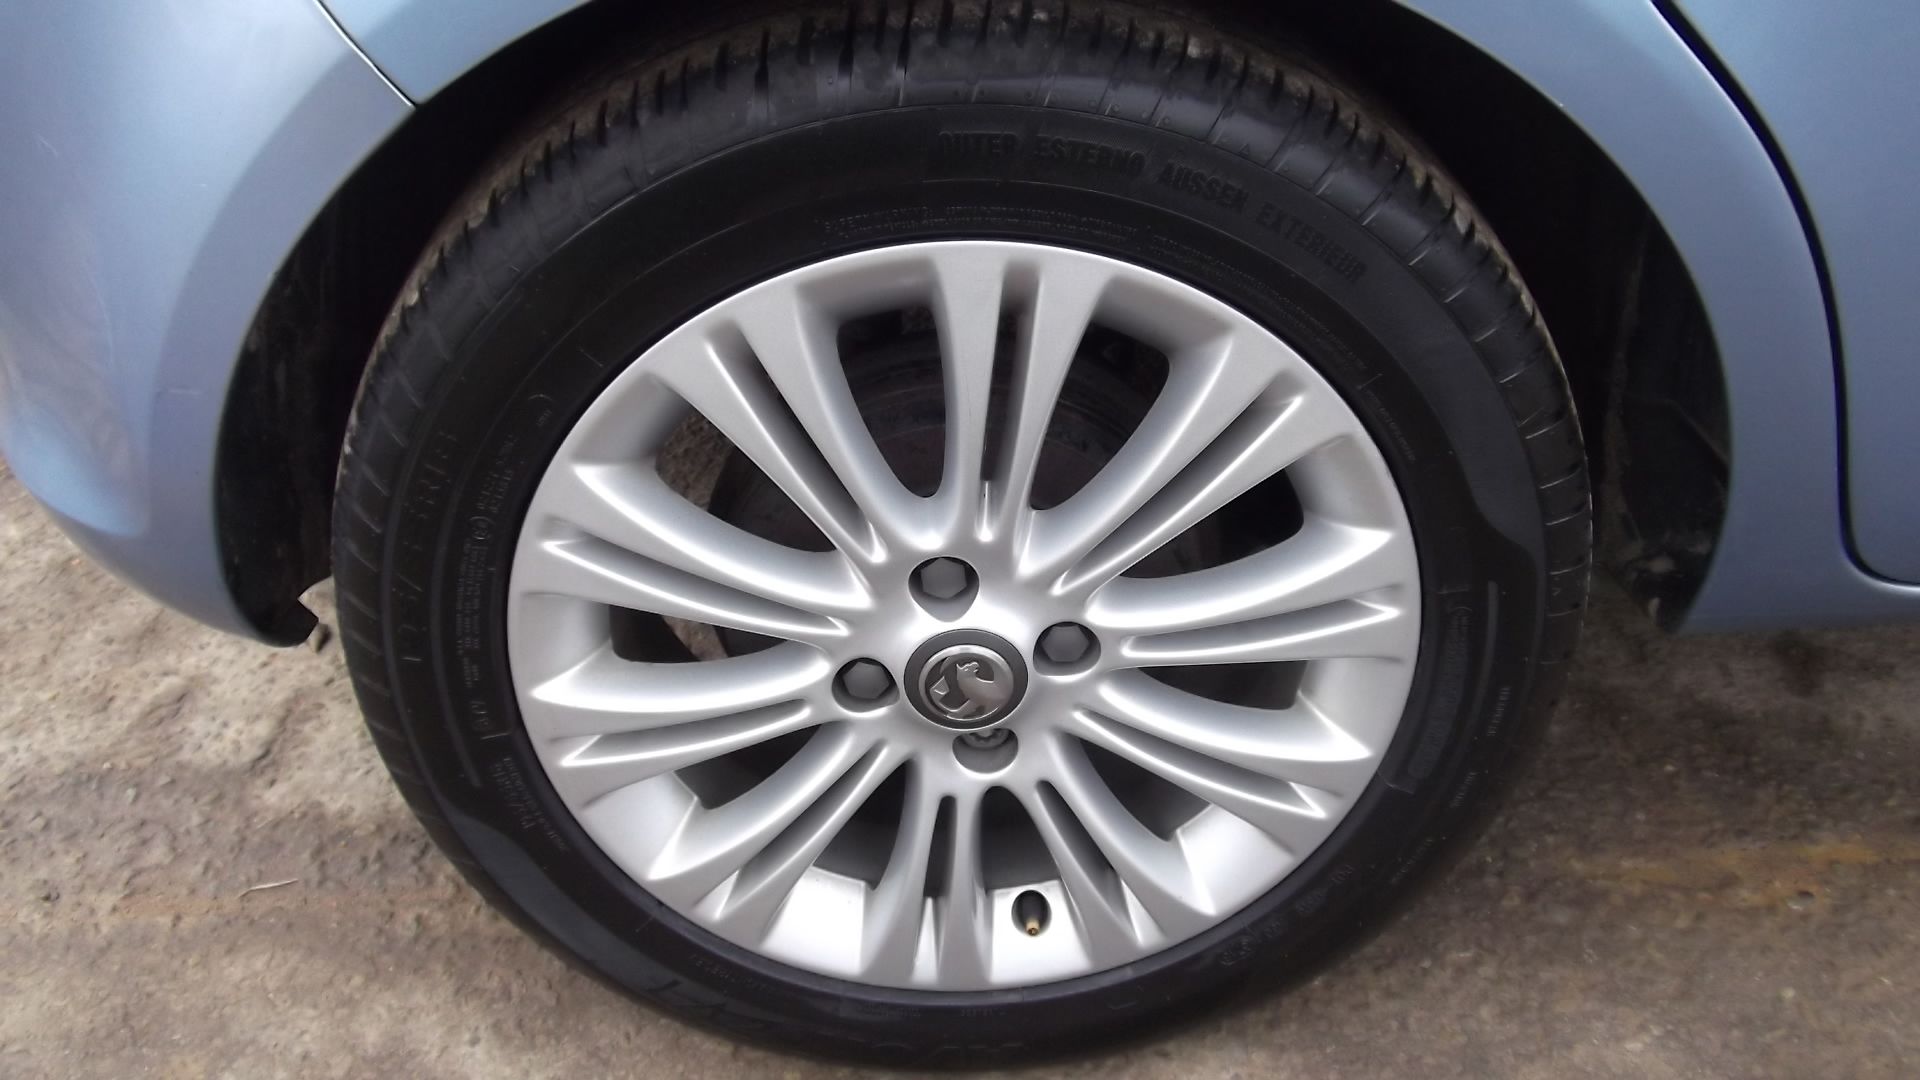 2014 Vauxhall Corsa Se 5Dr Hatchback - Full Service History - CL505 - NO VAT ON THE HAMMER - - Image 17 of 24